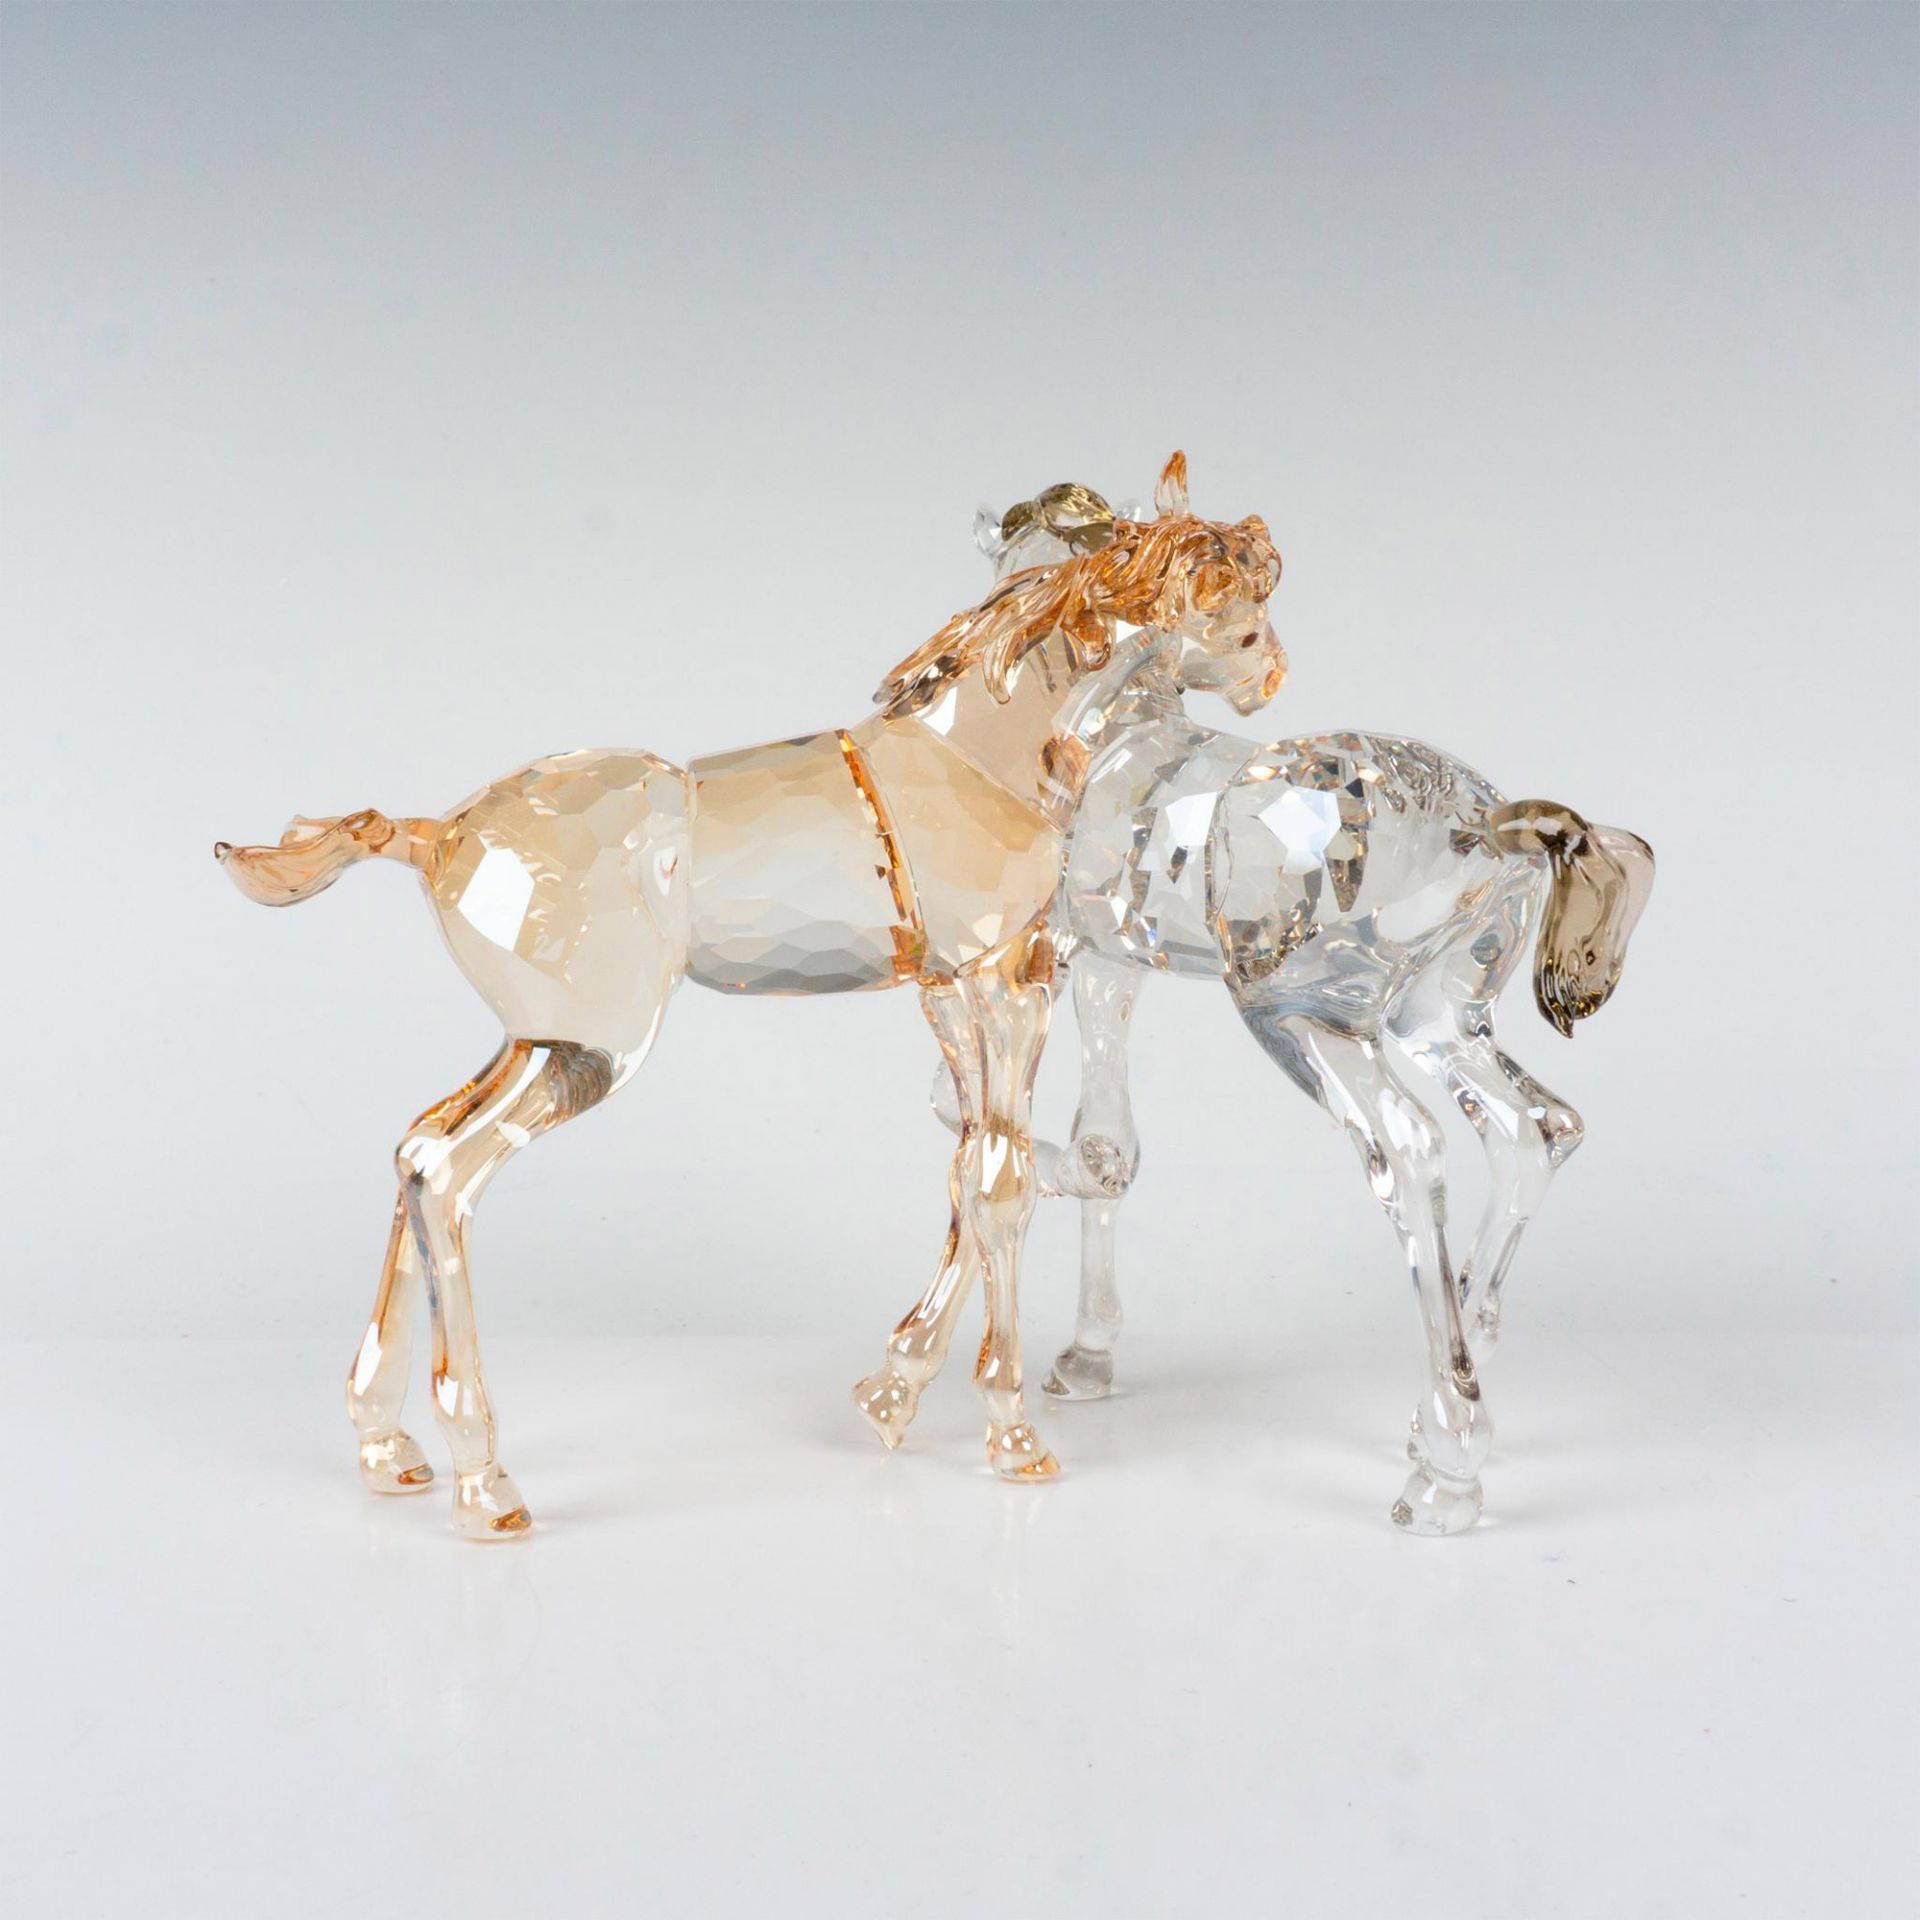 Swarovski Crystal Figurine, Foals Playing - Image 2 of 4